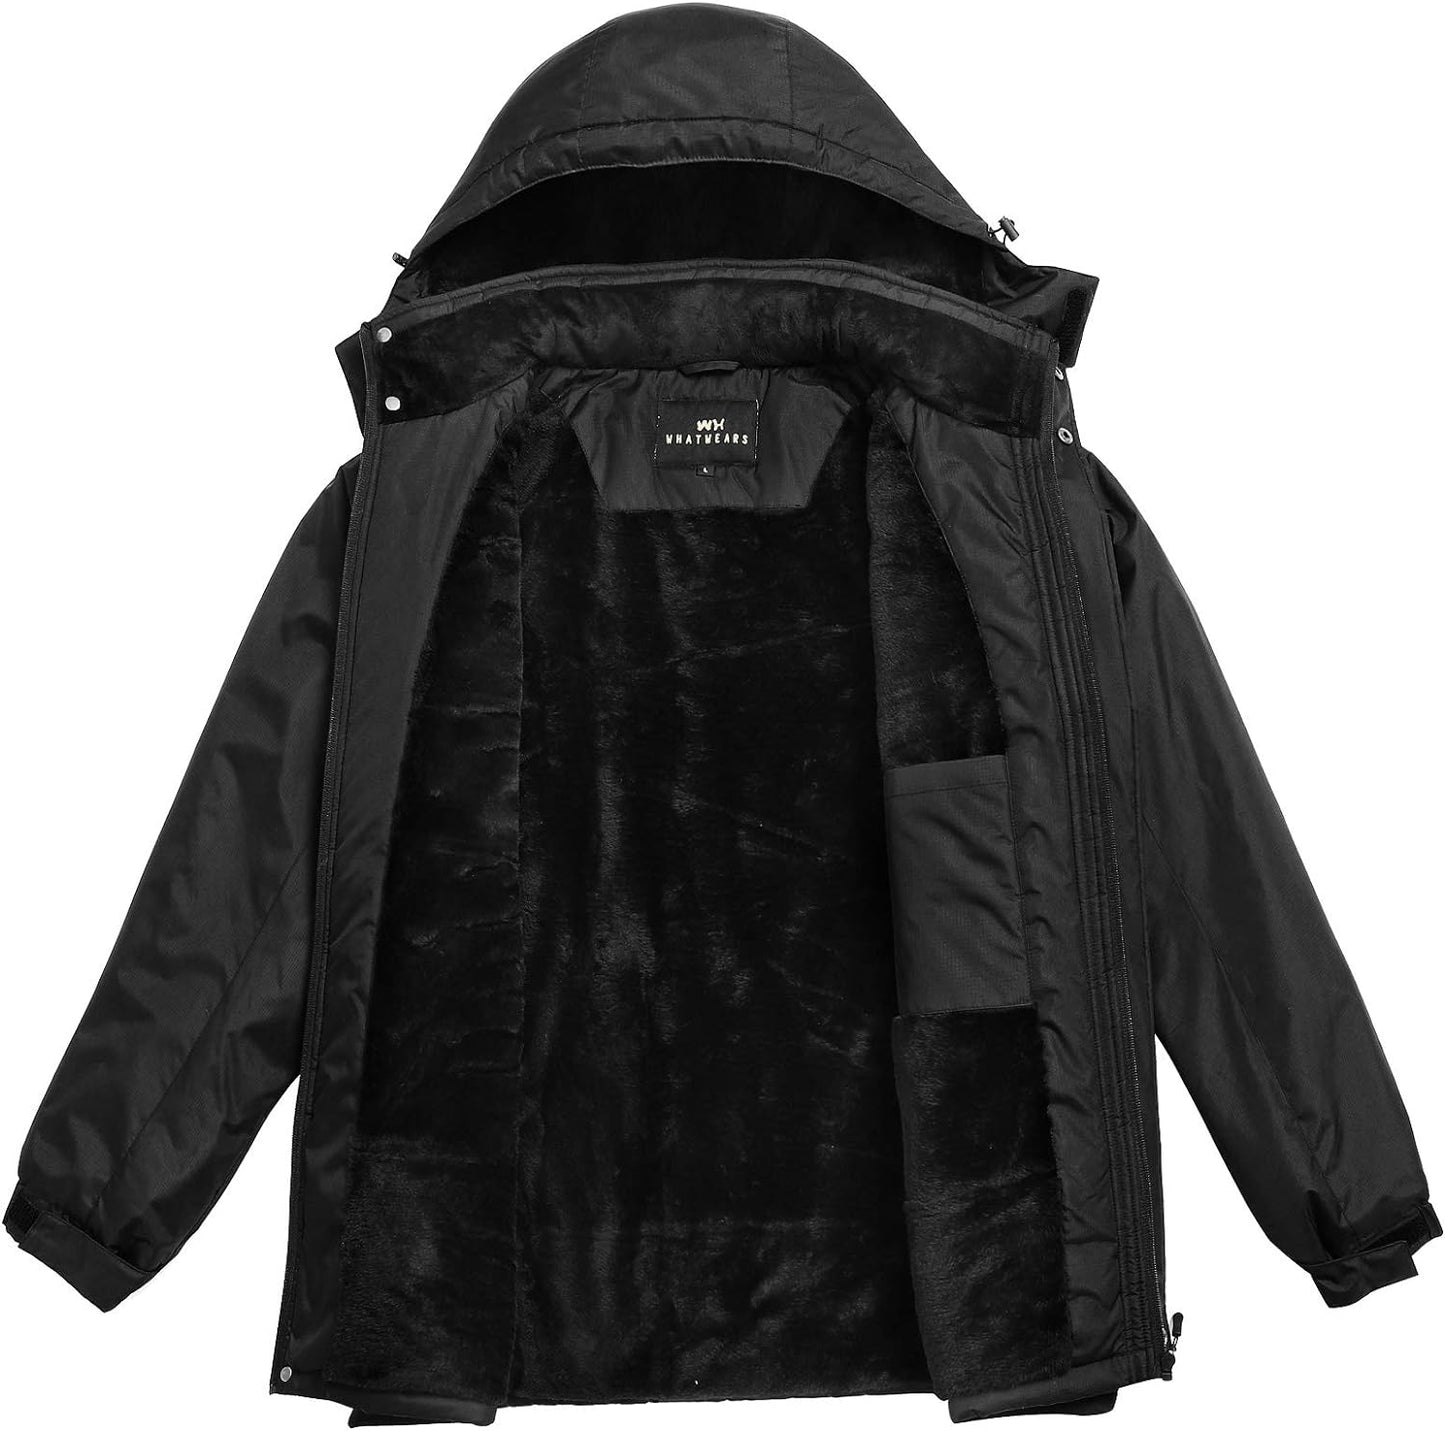 "Men's Waterproof Ski Jacket - Winter Warrior: Optimal Snow and Wind Protection, Hooded with Sleek Black Design"